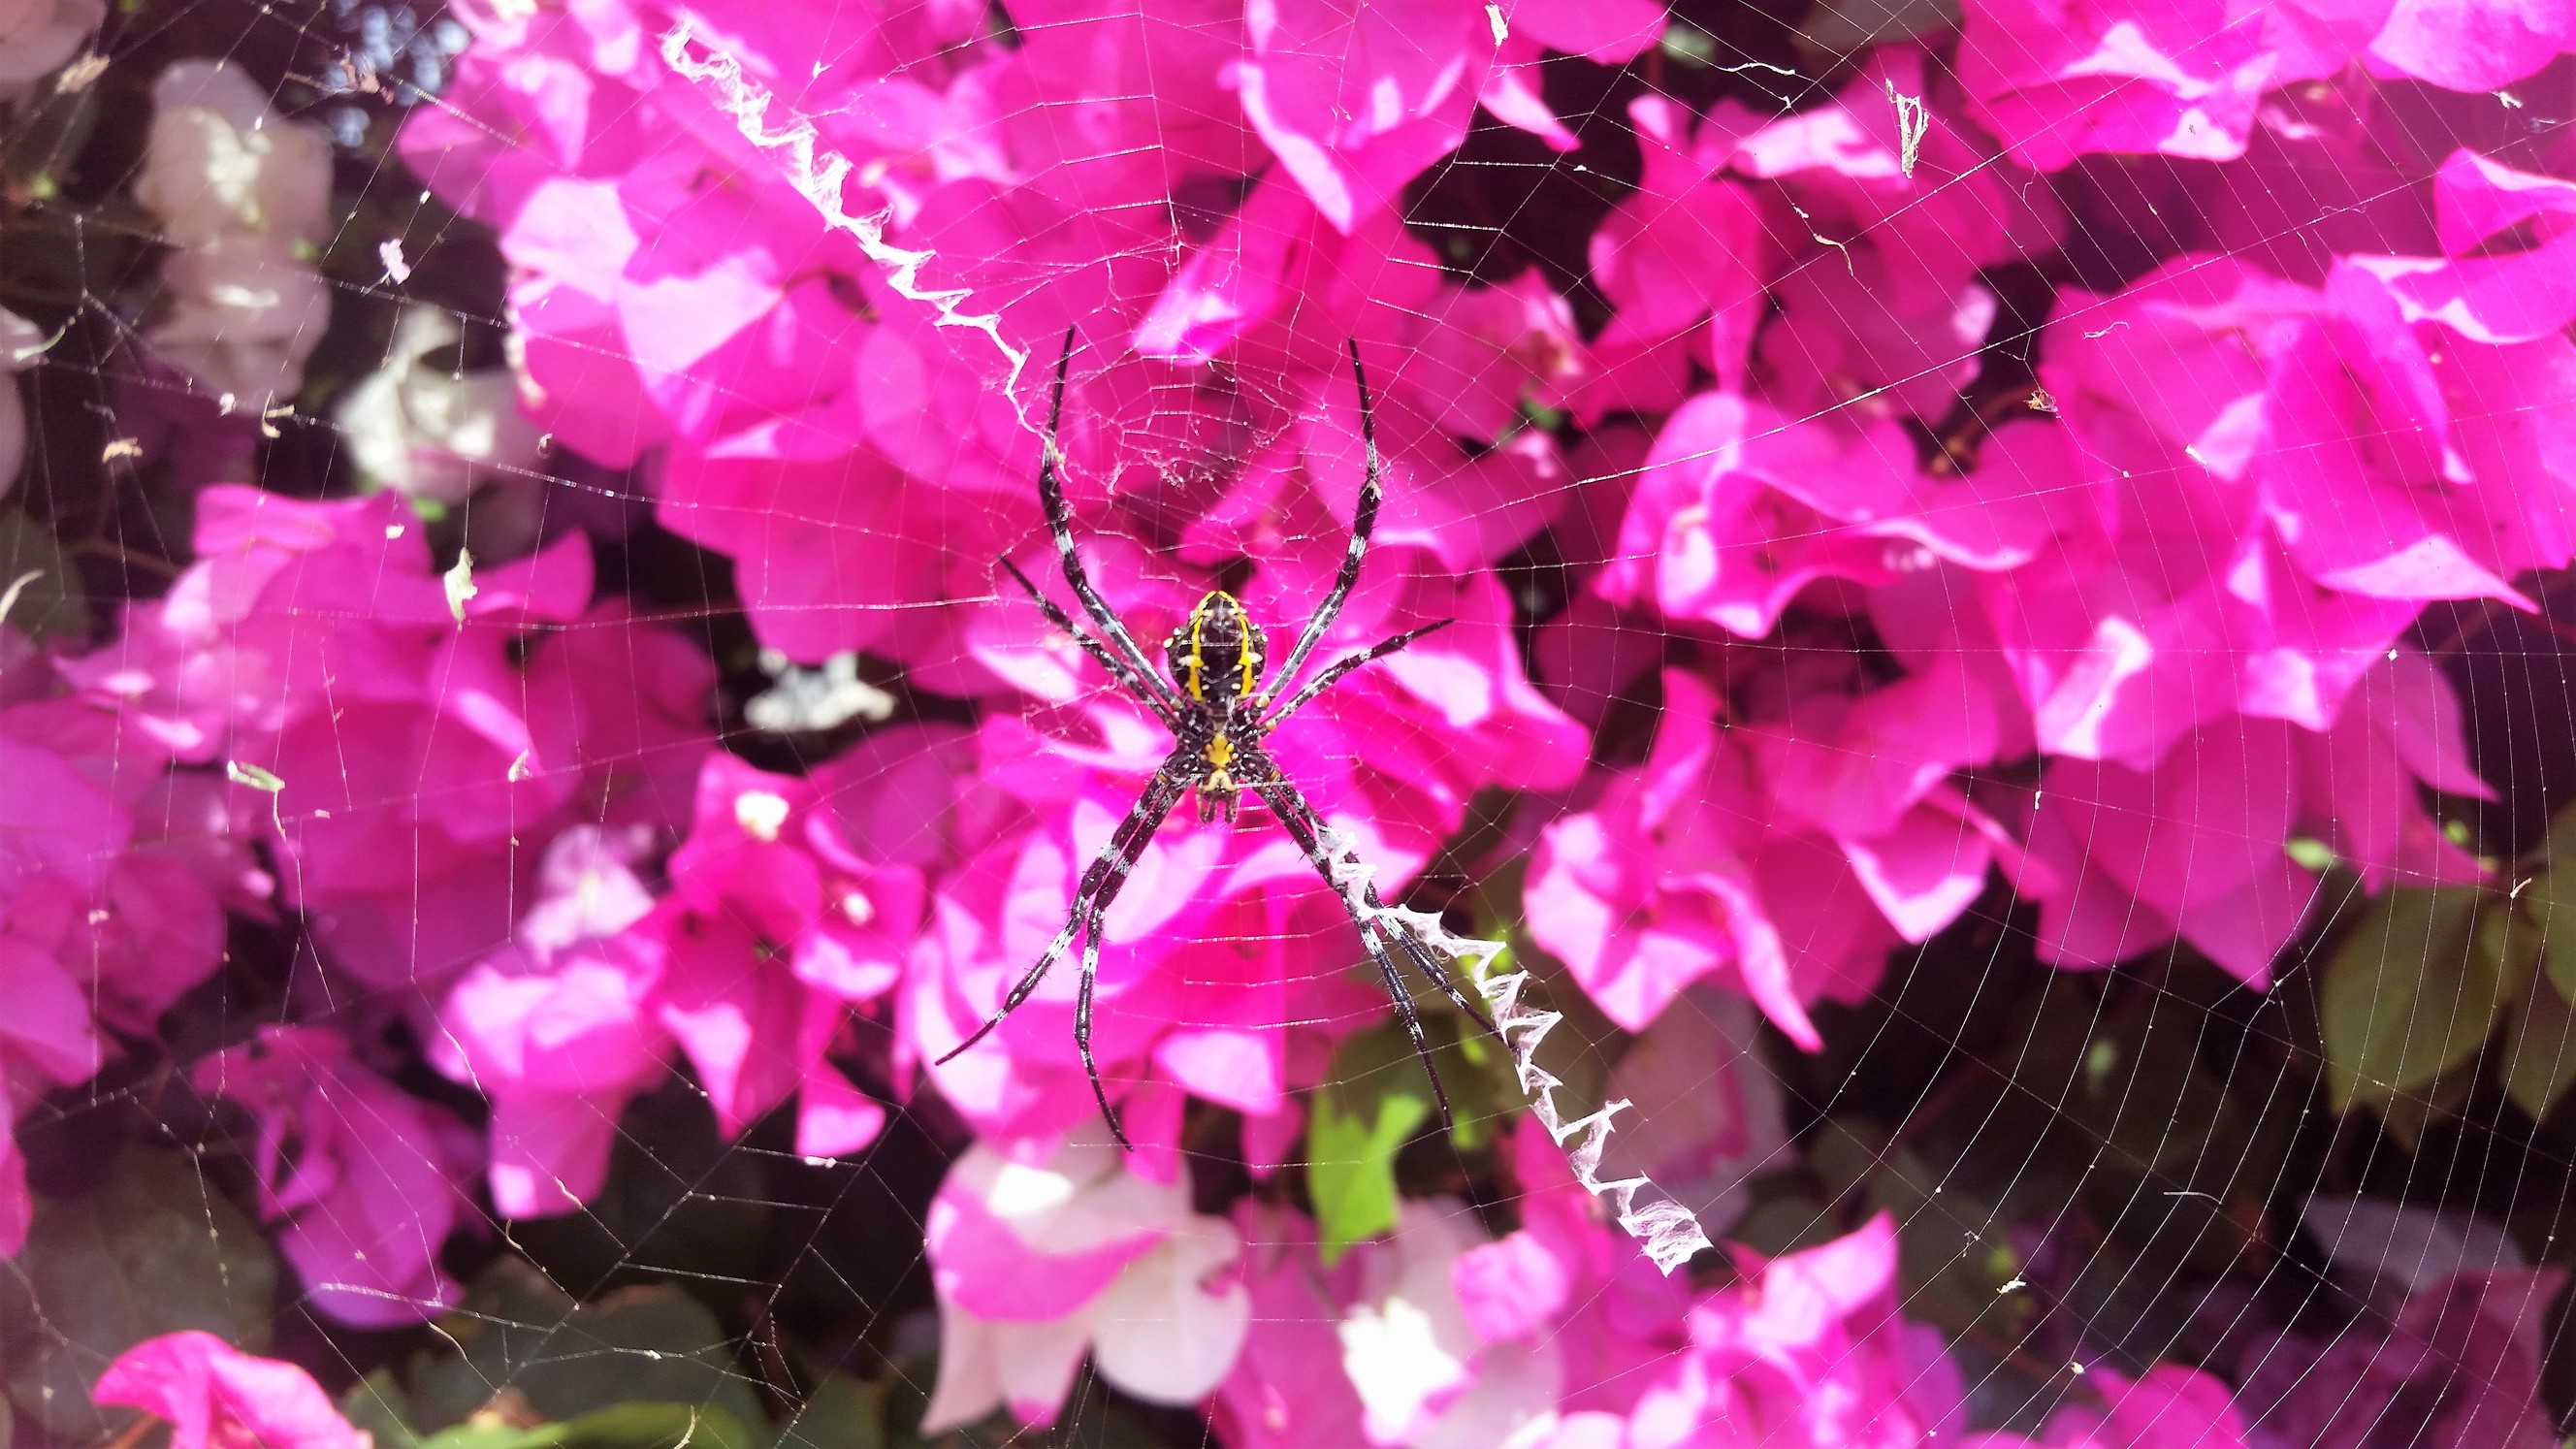 Hawaiian Garden Spider